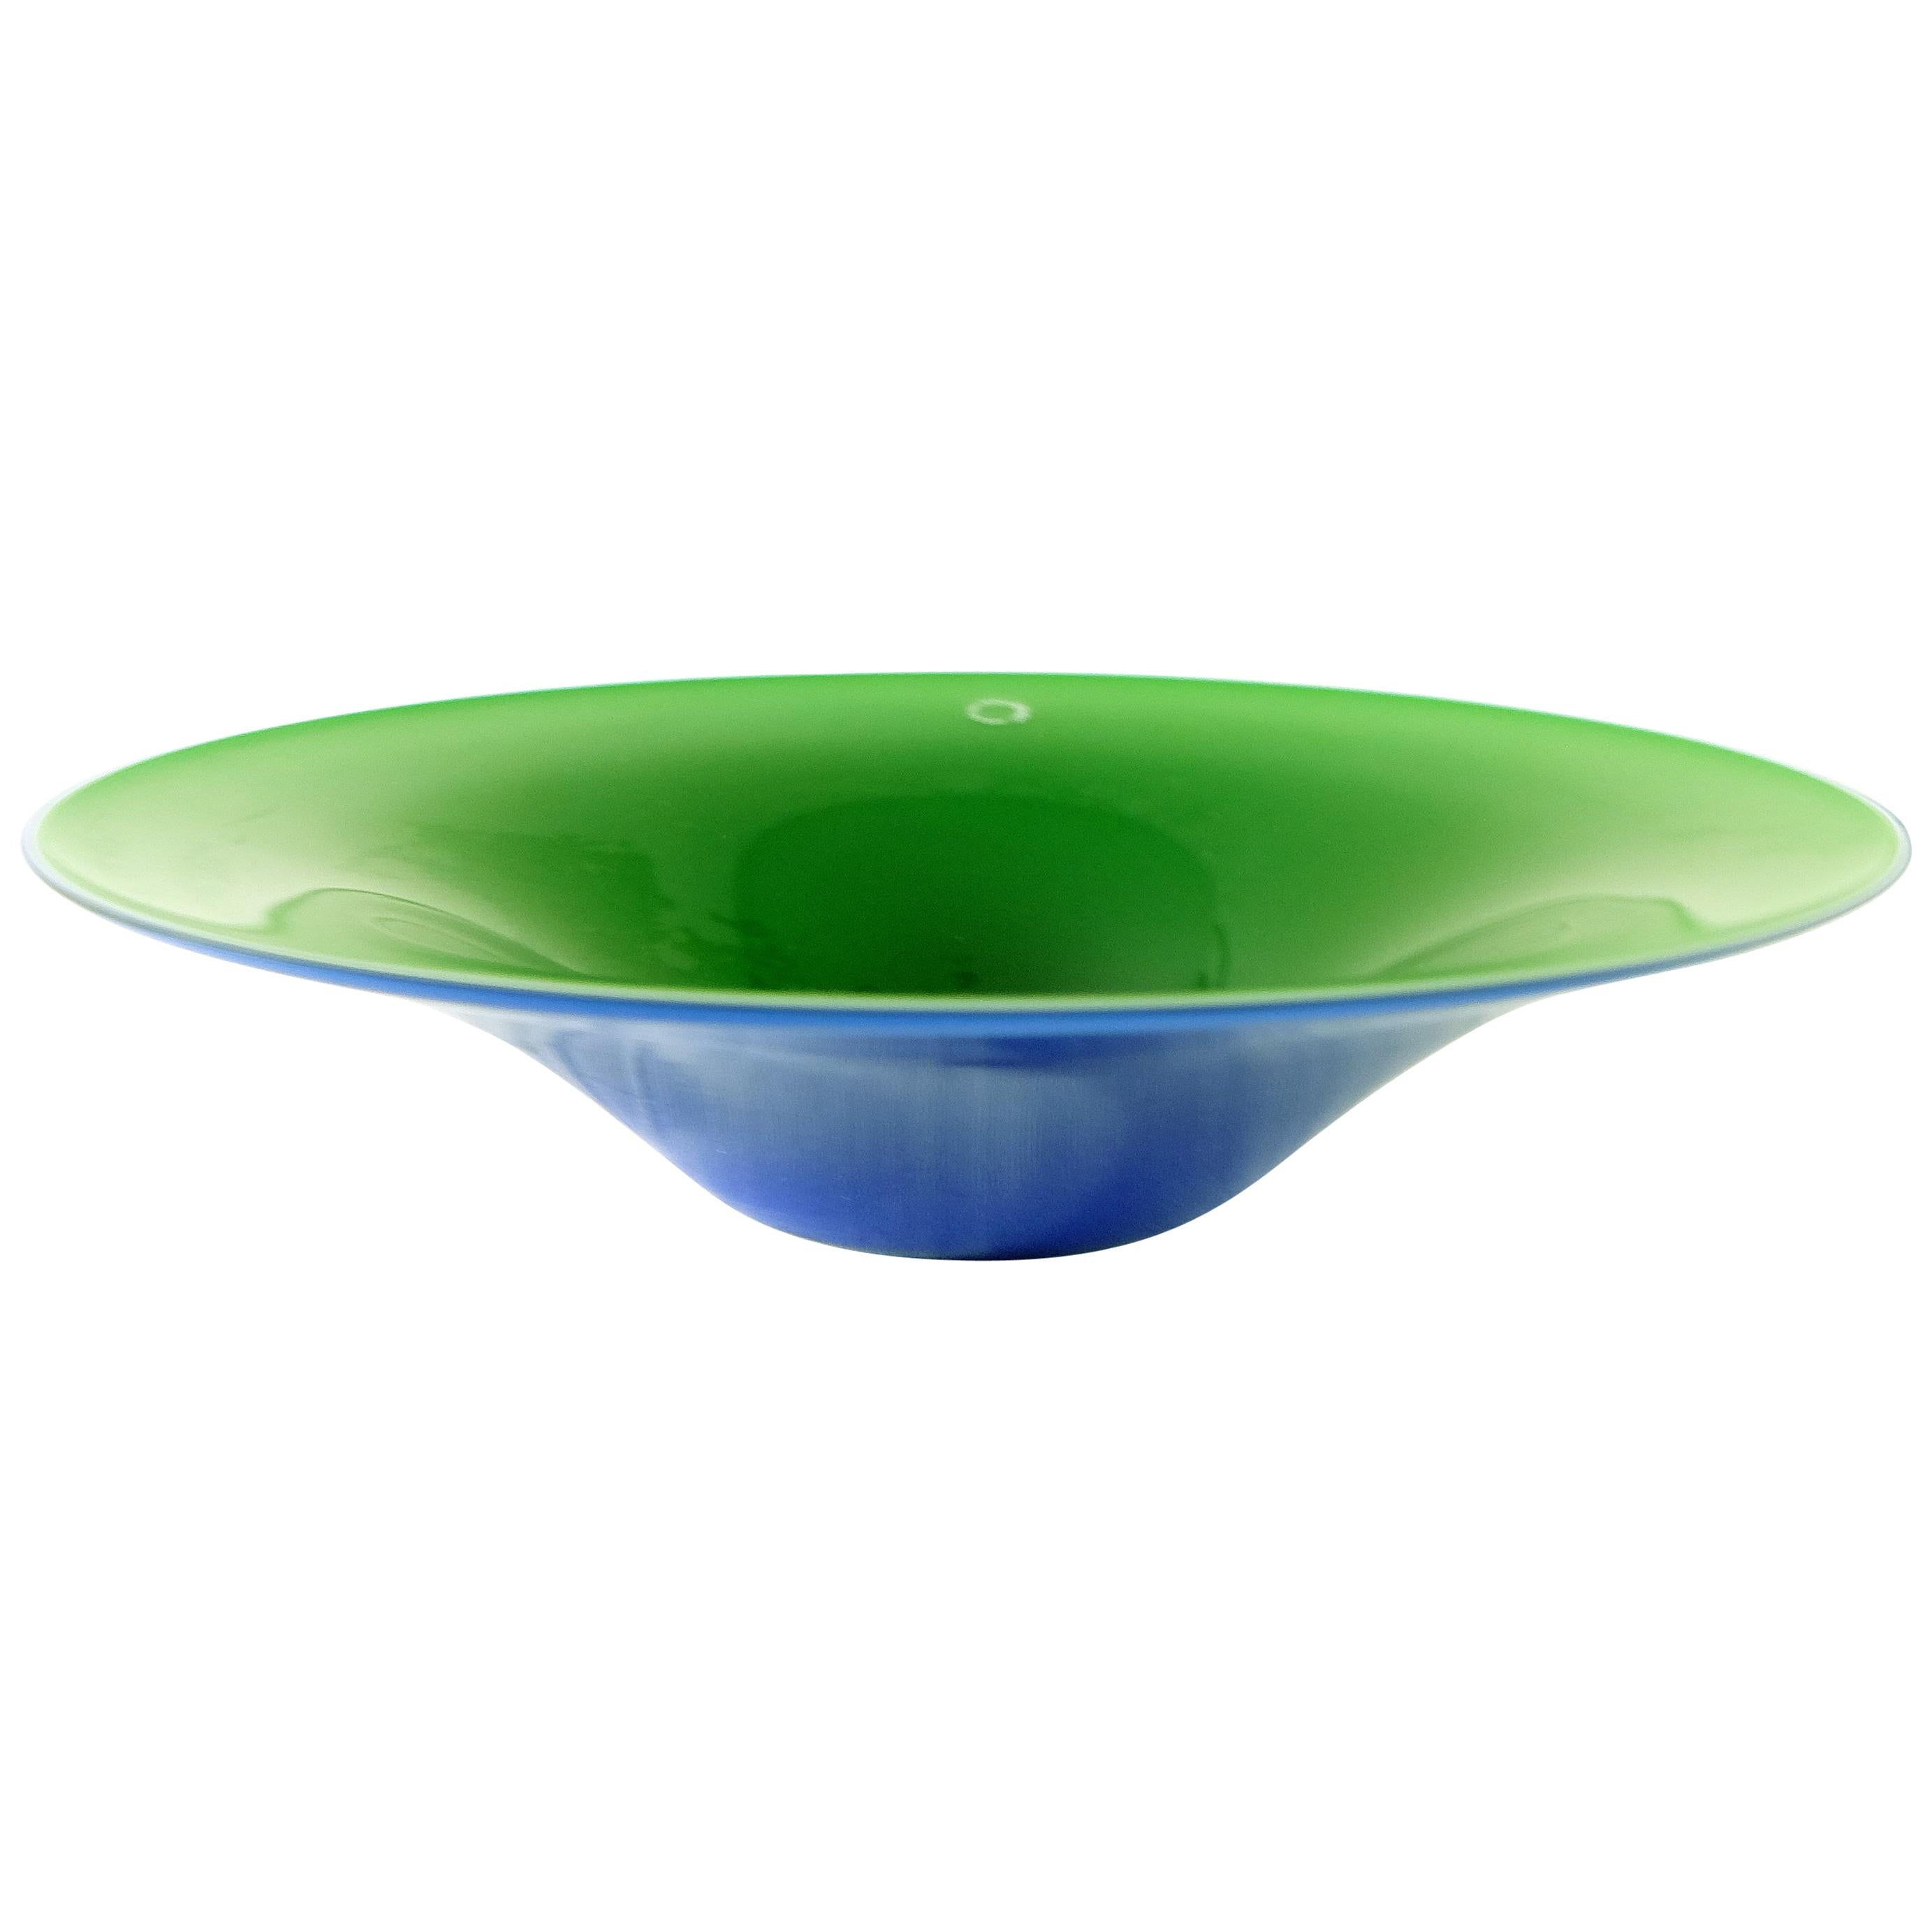 V. Nason & C. :: Italien Schale aus blauem und grünem geblasenem Muranoglas